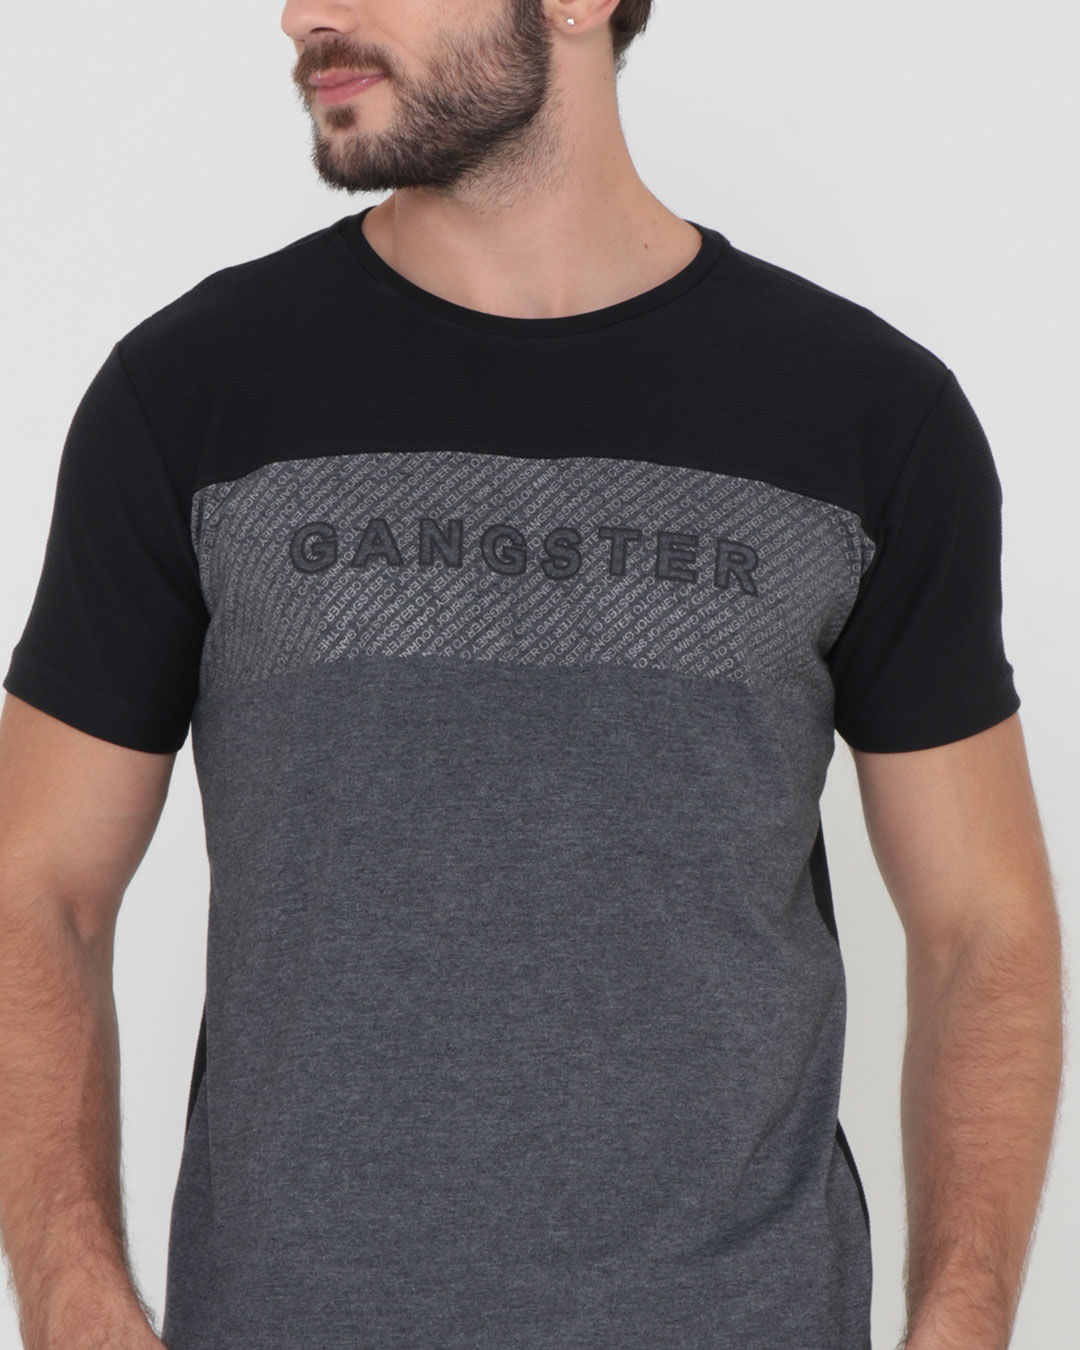 Camiseta-Masculina-Estampa-Gansgster-Preta